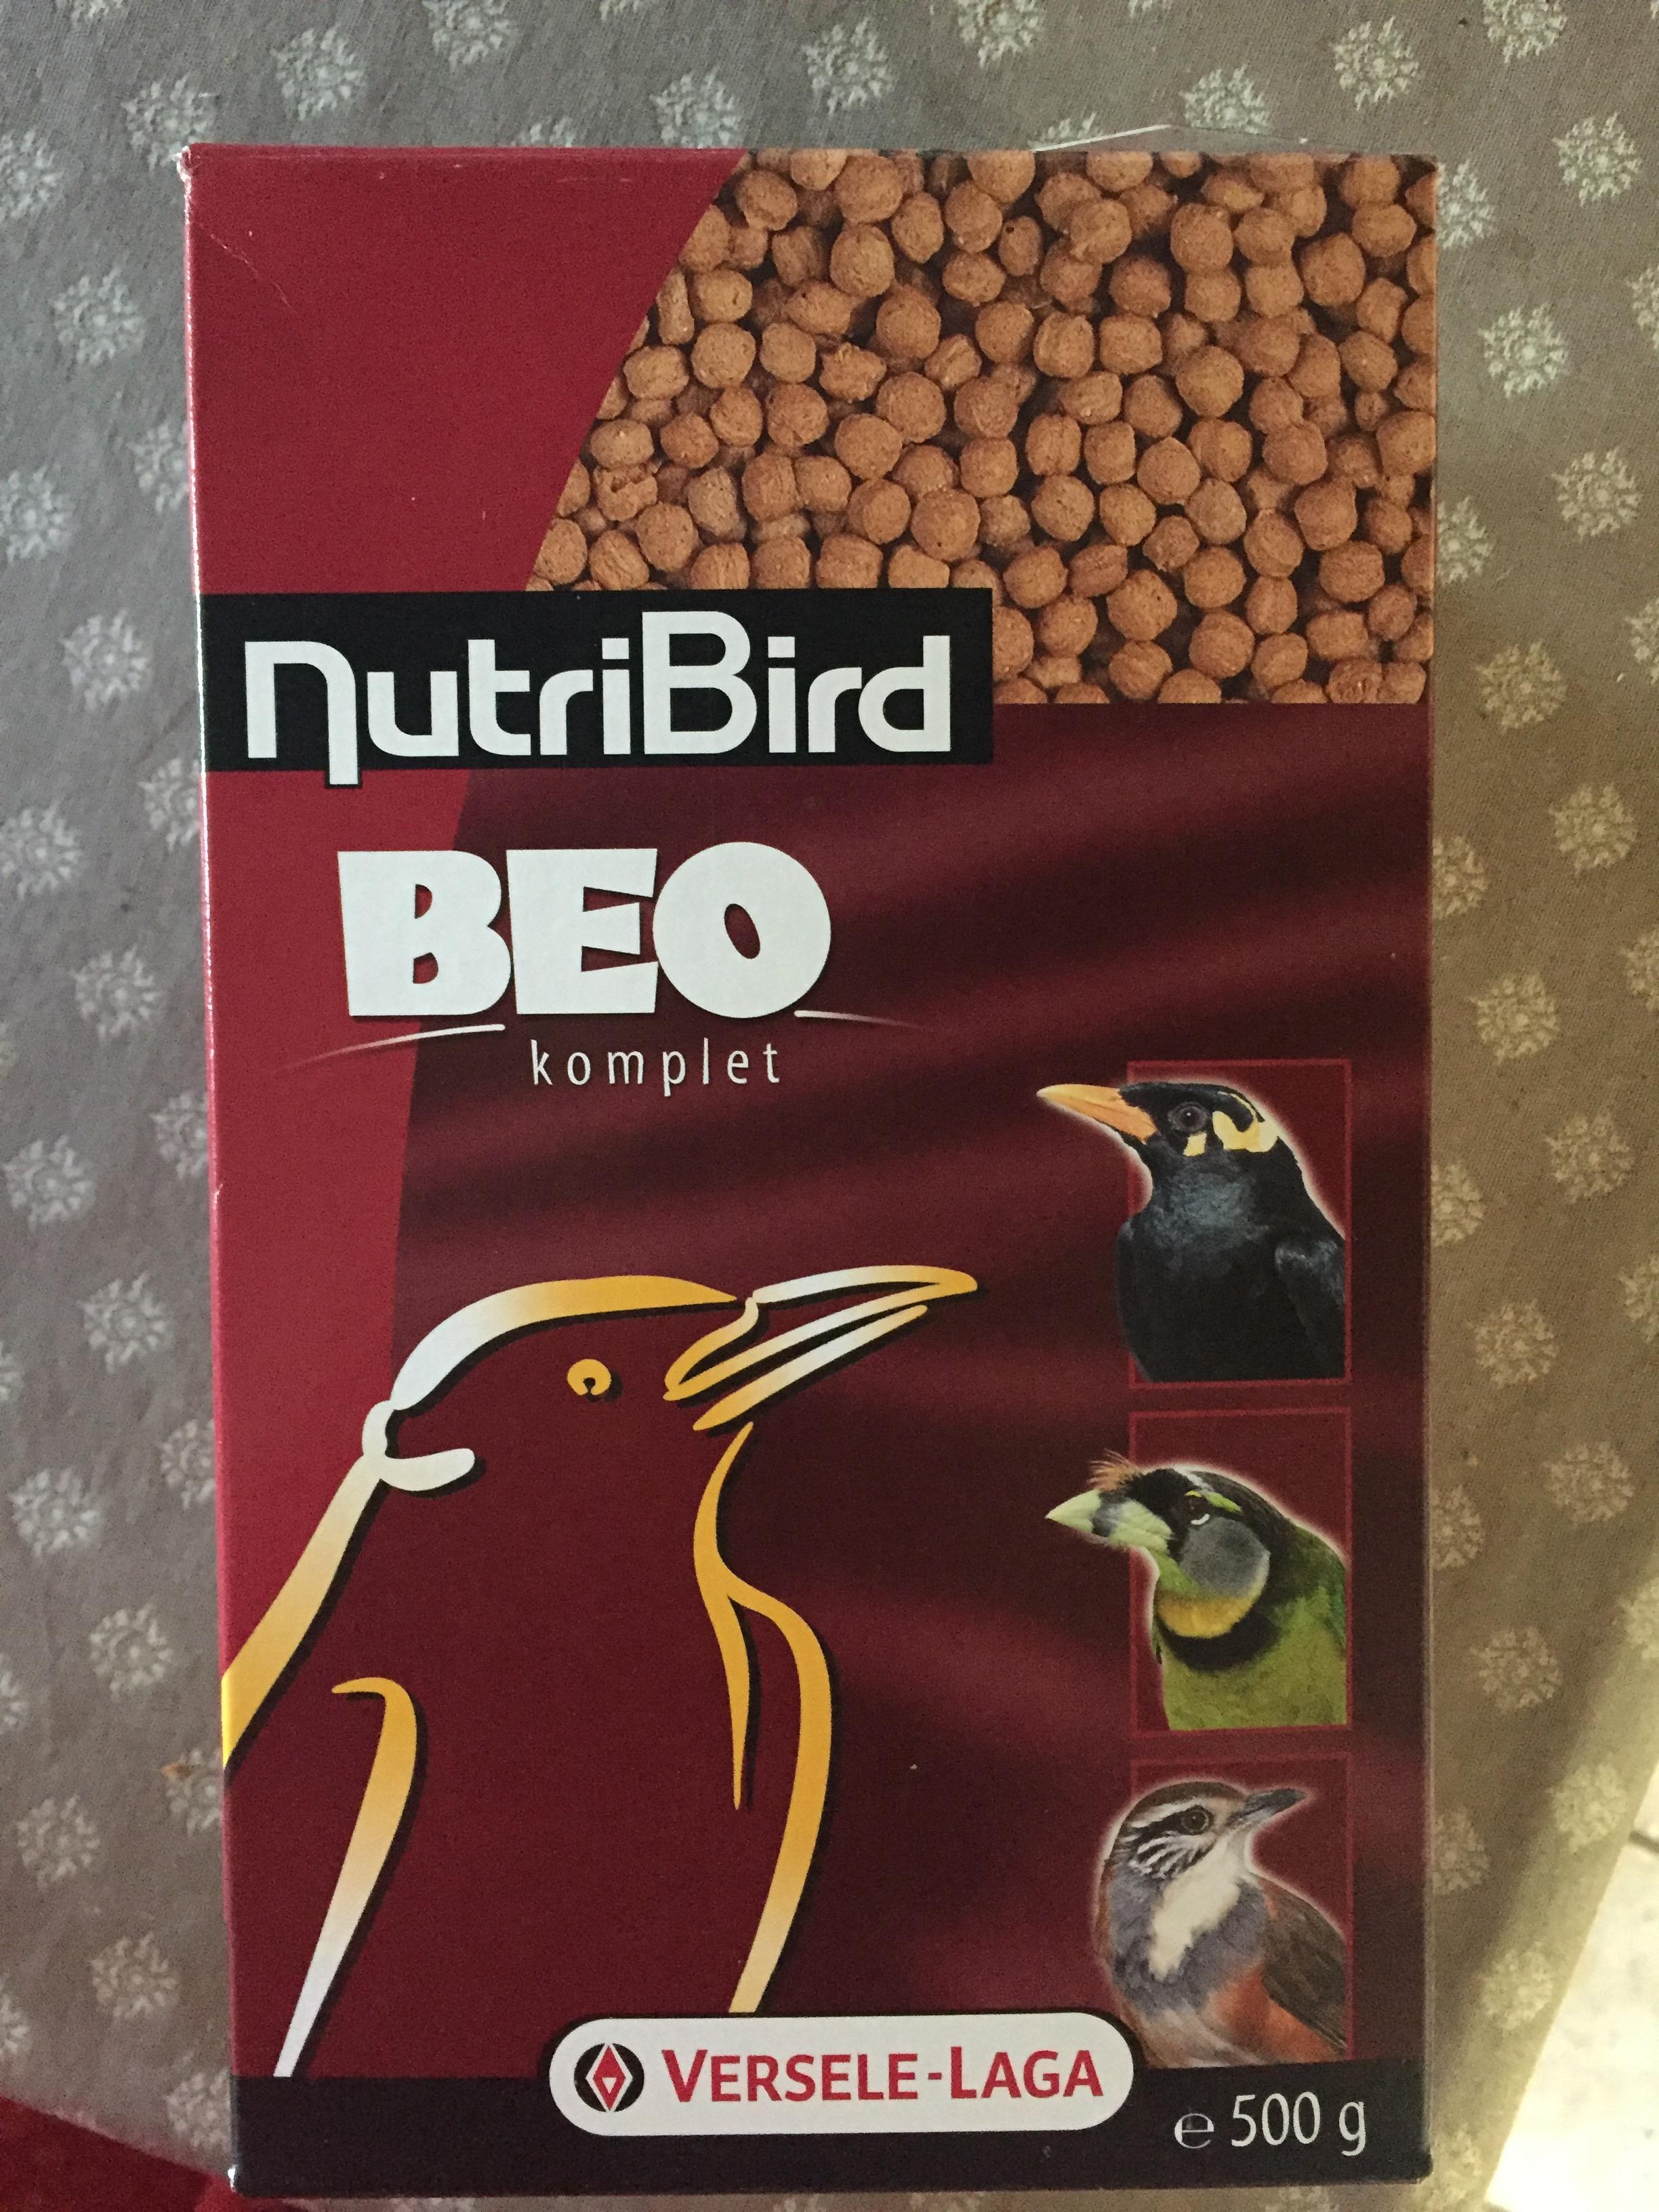 troc de troc aliment oiseaux beo de nutribird image 0